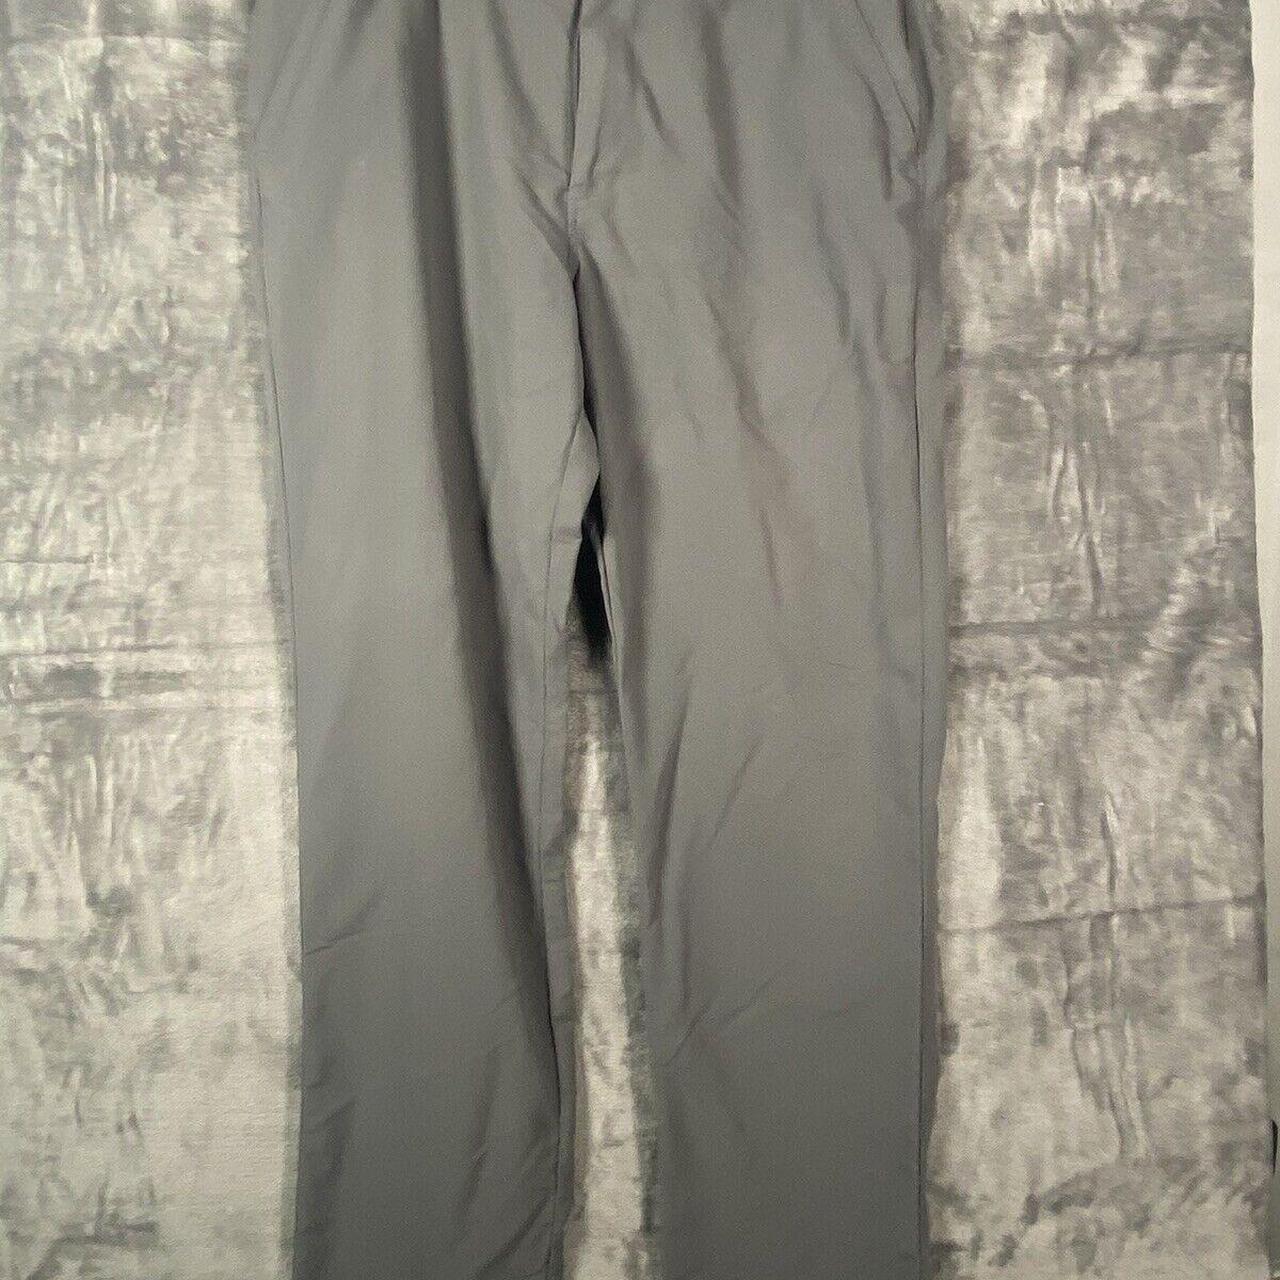 ROHAN Walking Trousers UV Protection Size W34 L31... - Depop